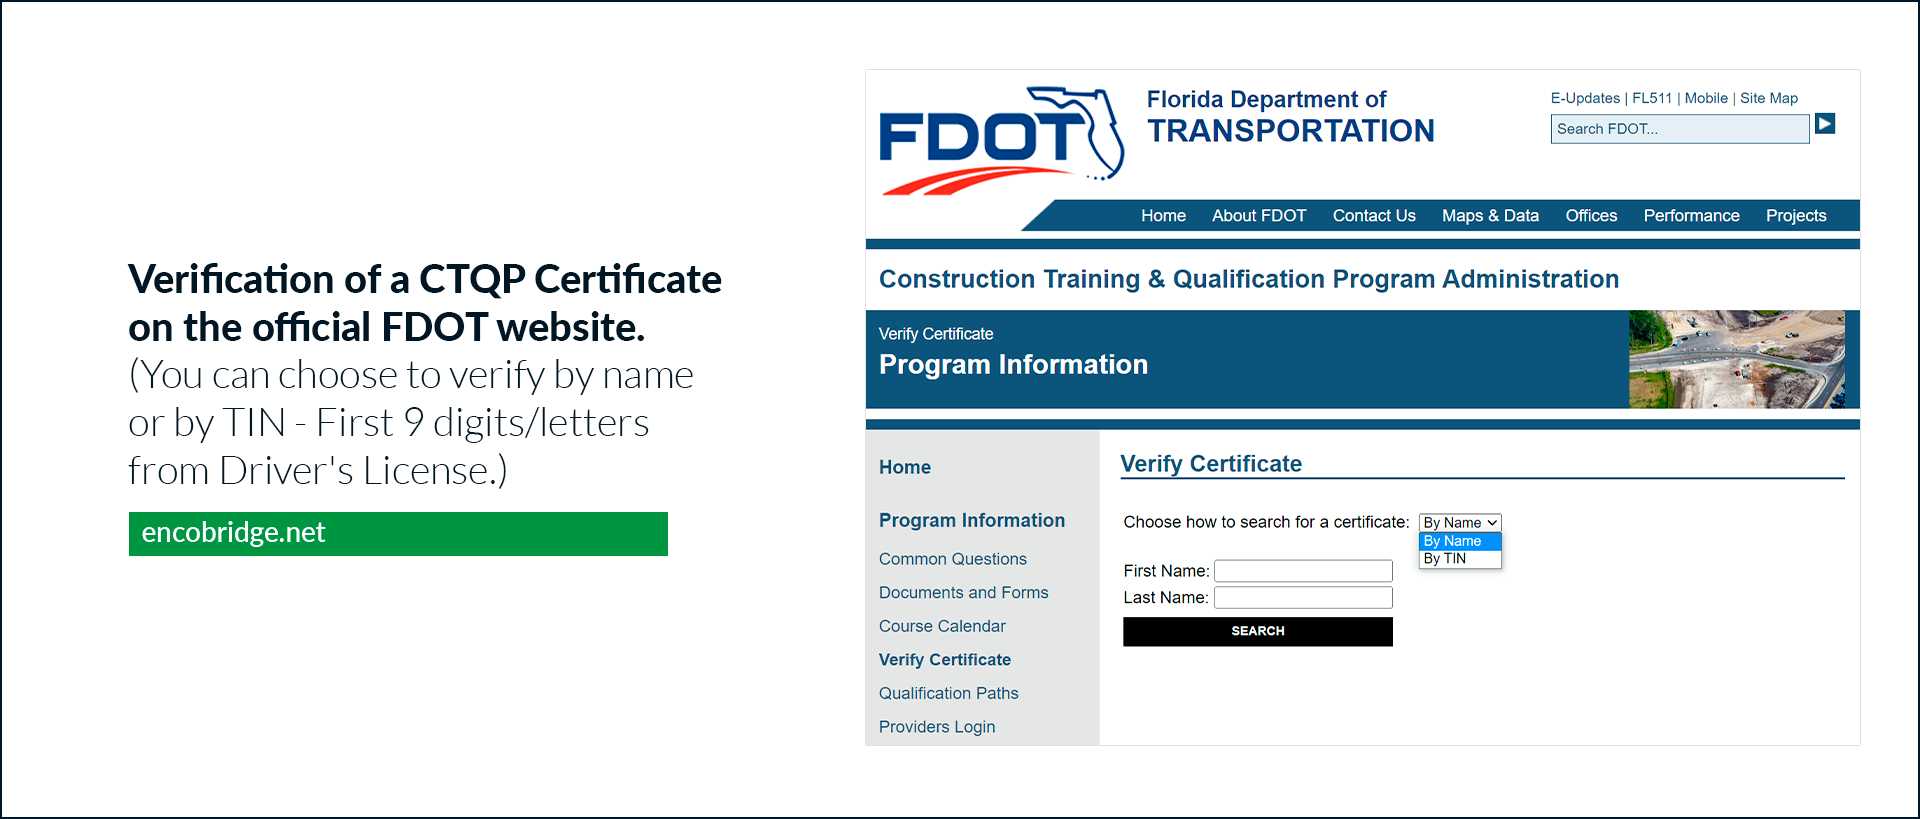 09 Verification of a CTQP Certificate on the official FDOT website